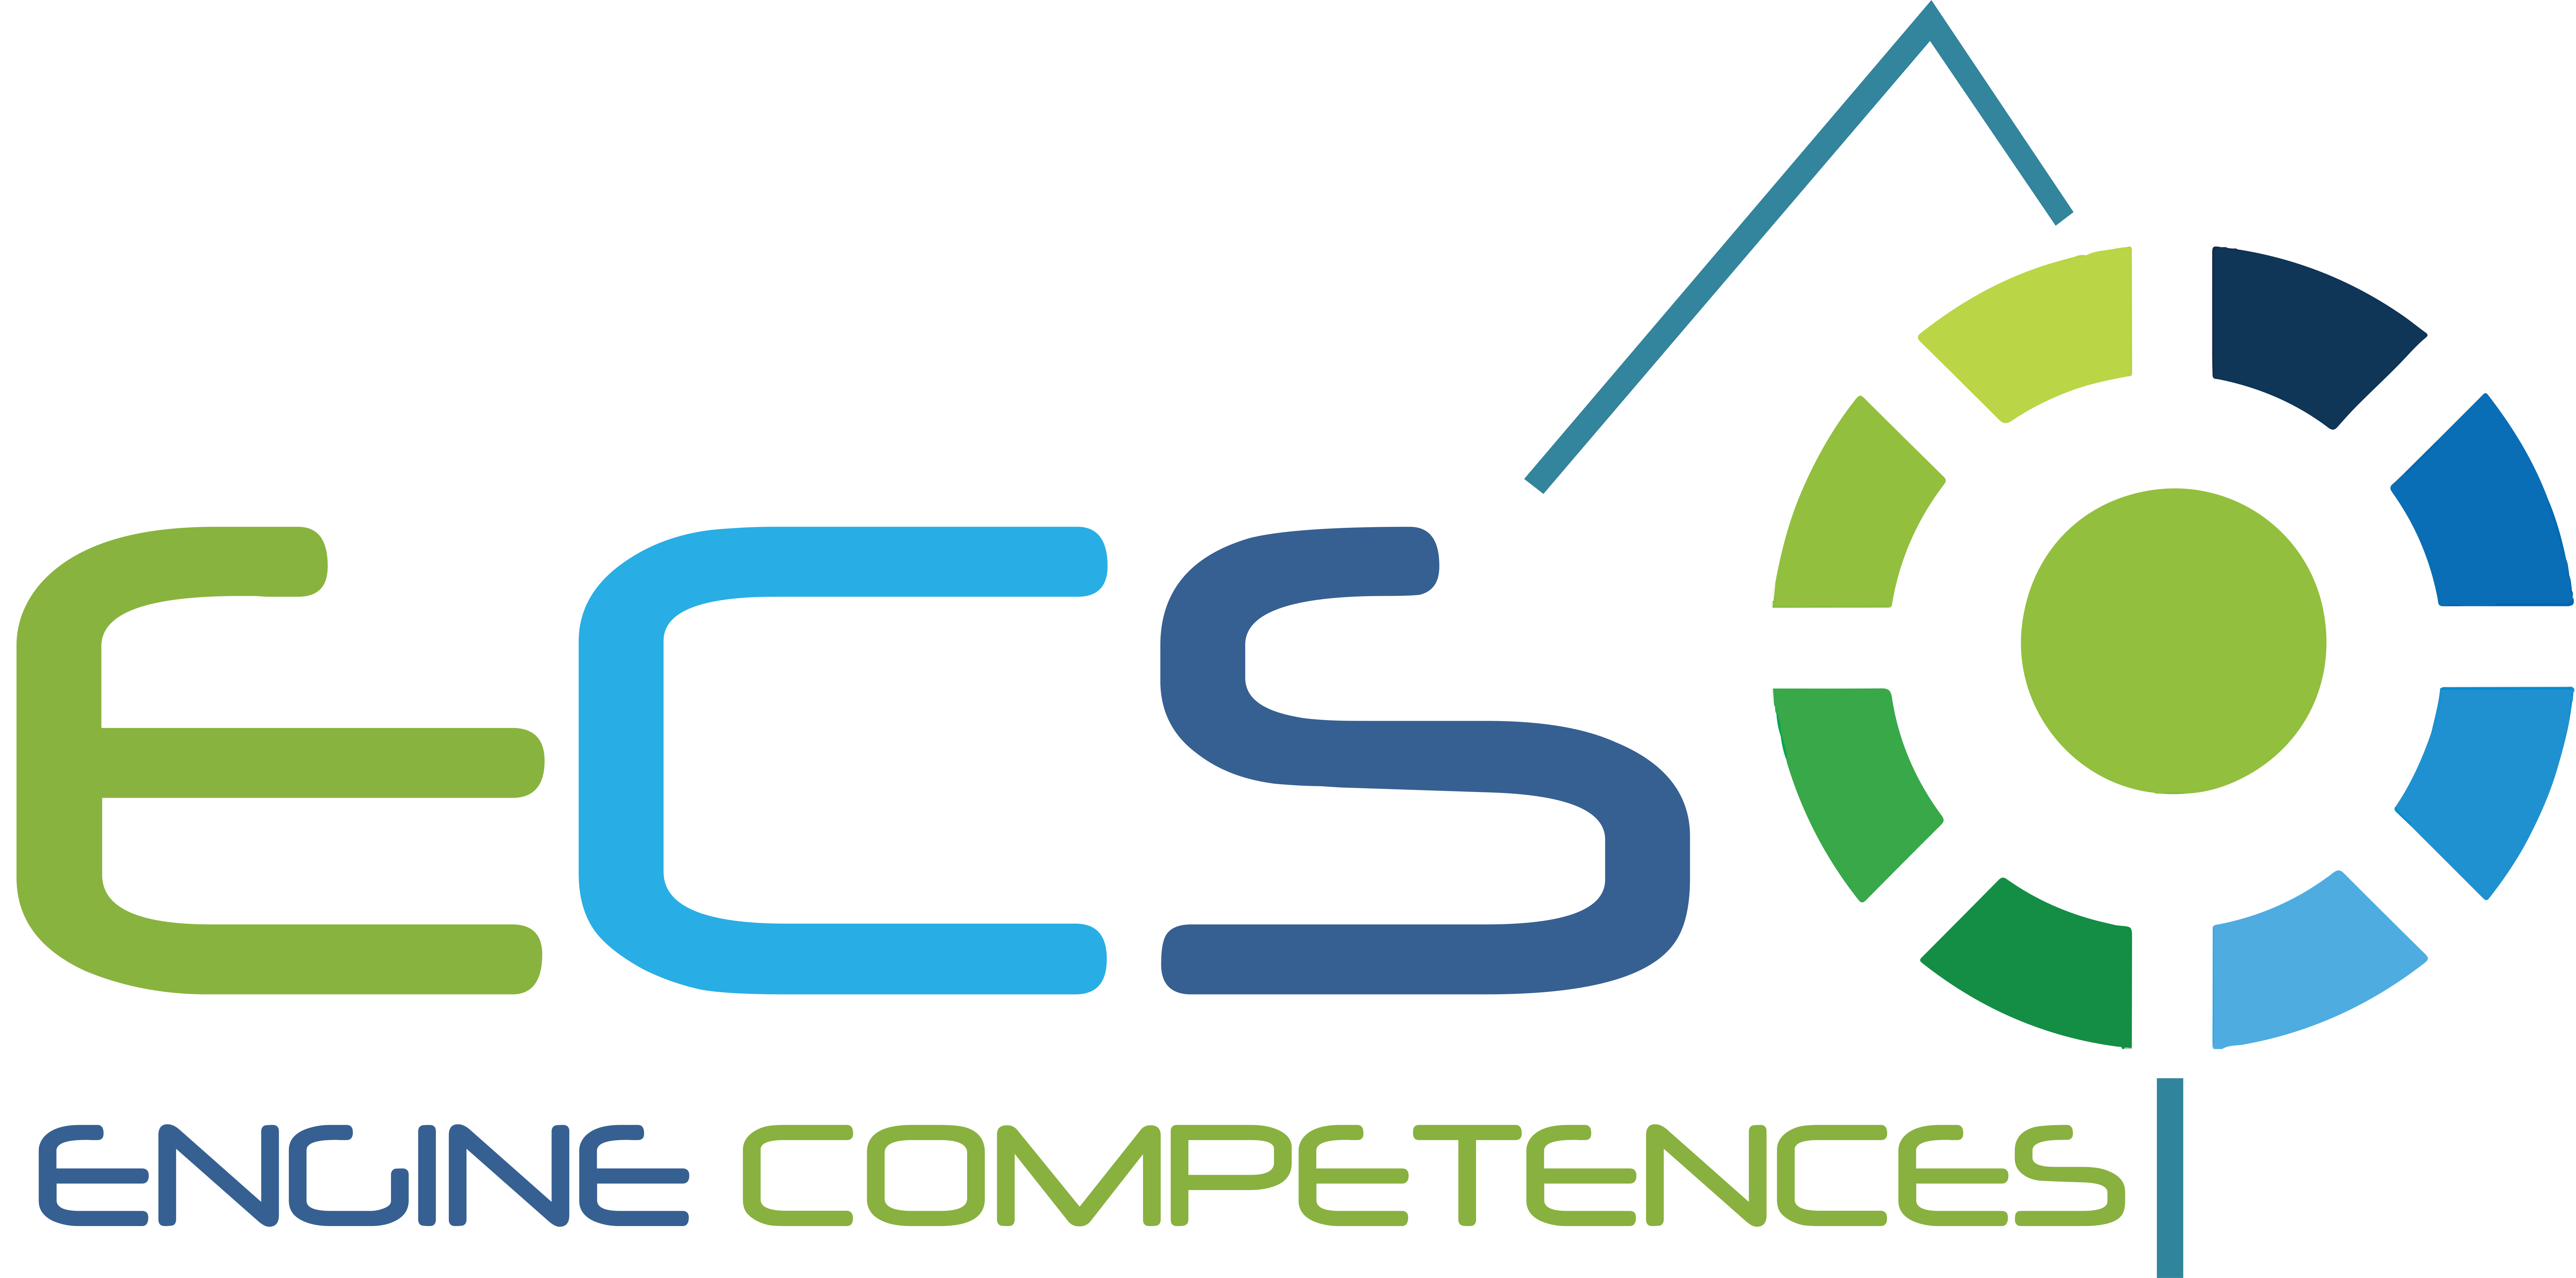 Engine Competences Services logo